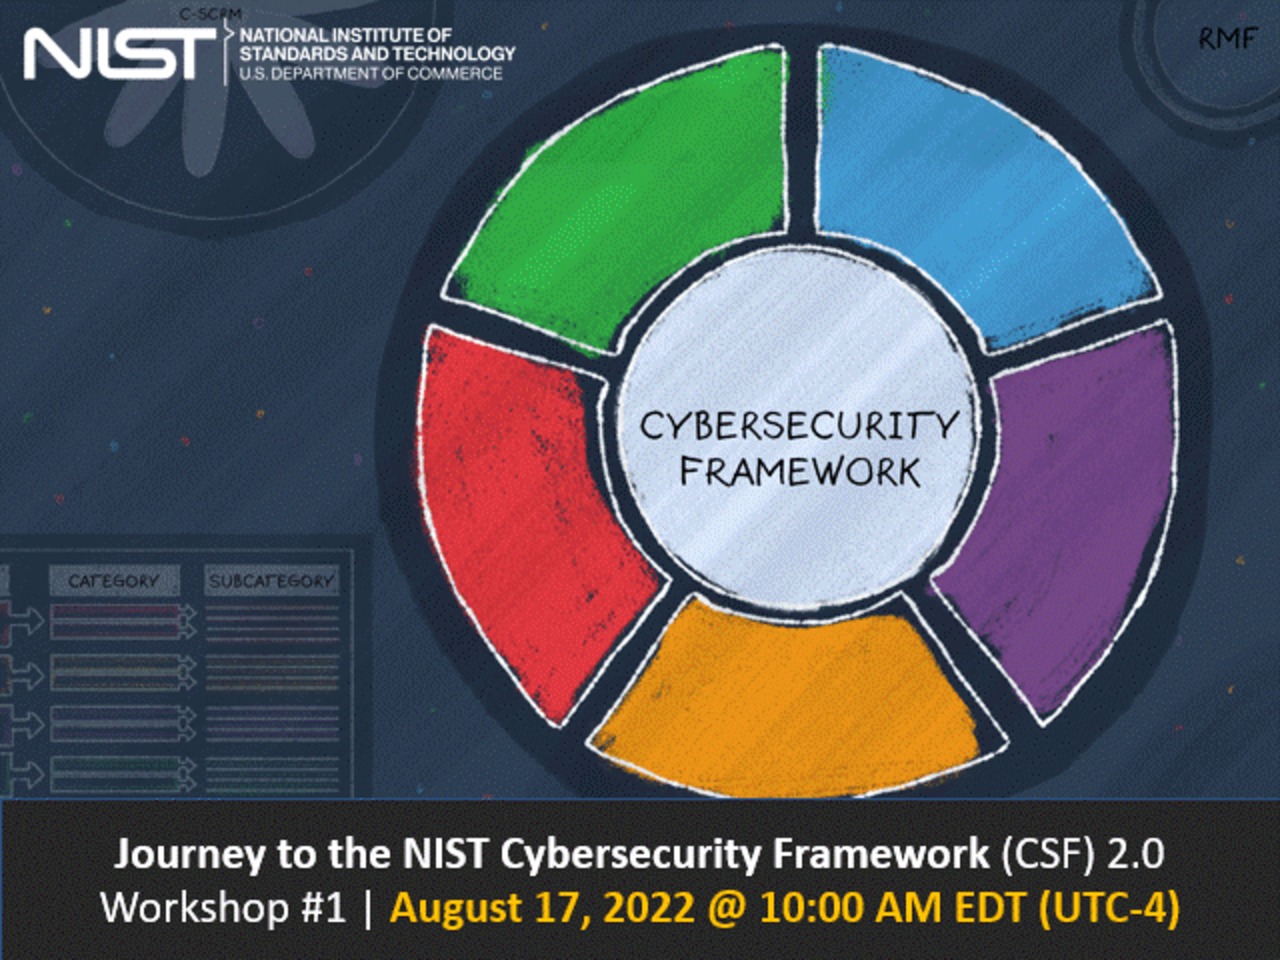 Journey to the NIST Cybersecurity Framework (CSF) 2.0 | Workshop #1 CSF 2.0.4